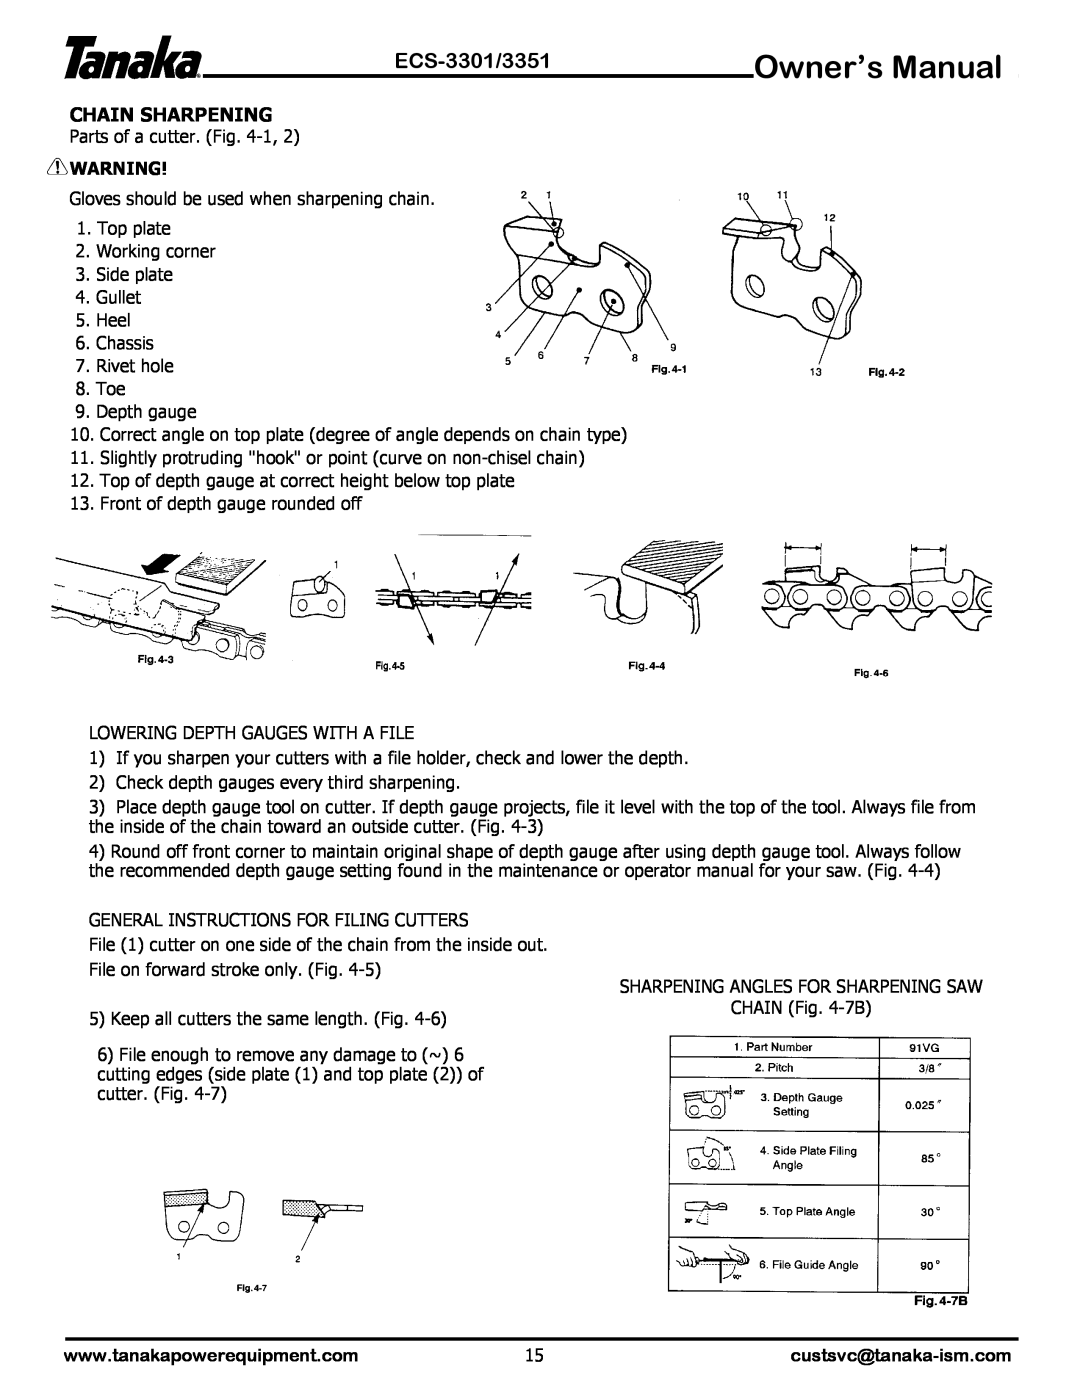 Tanaka ECS-3351 manual Owner’s Manual, ECS-3301/3351, Chain Sharpening, custsvc@tanaka-ism.com 